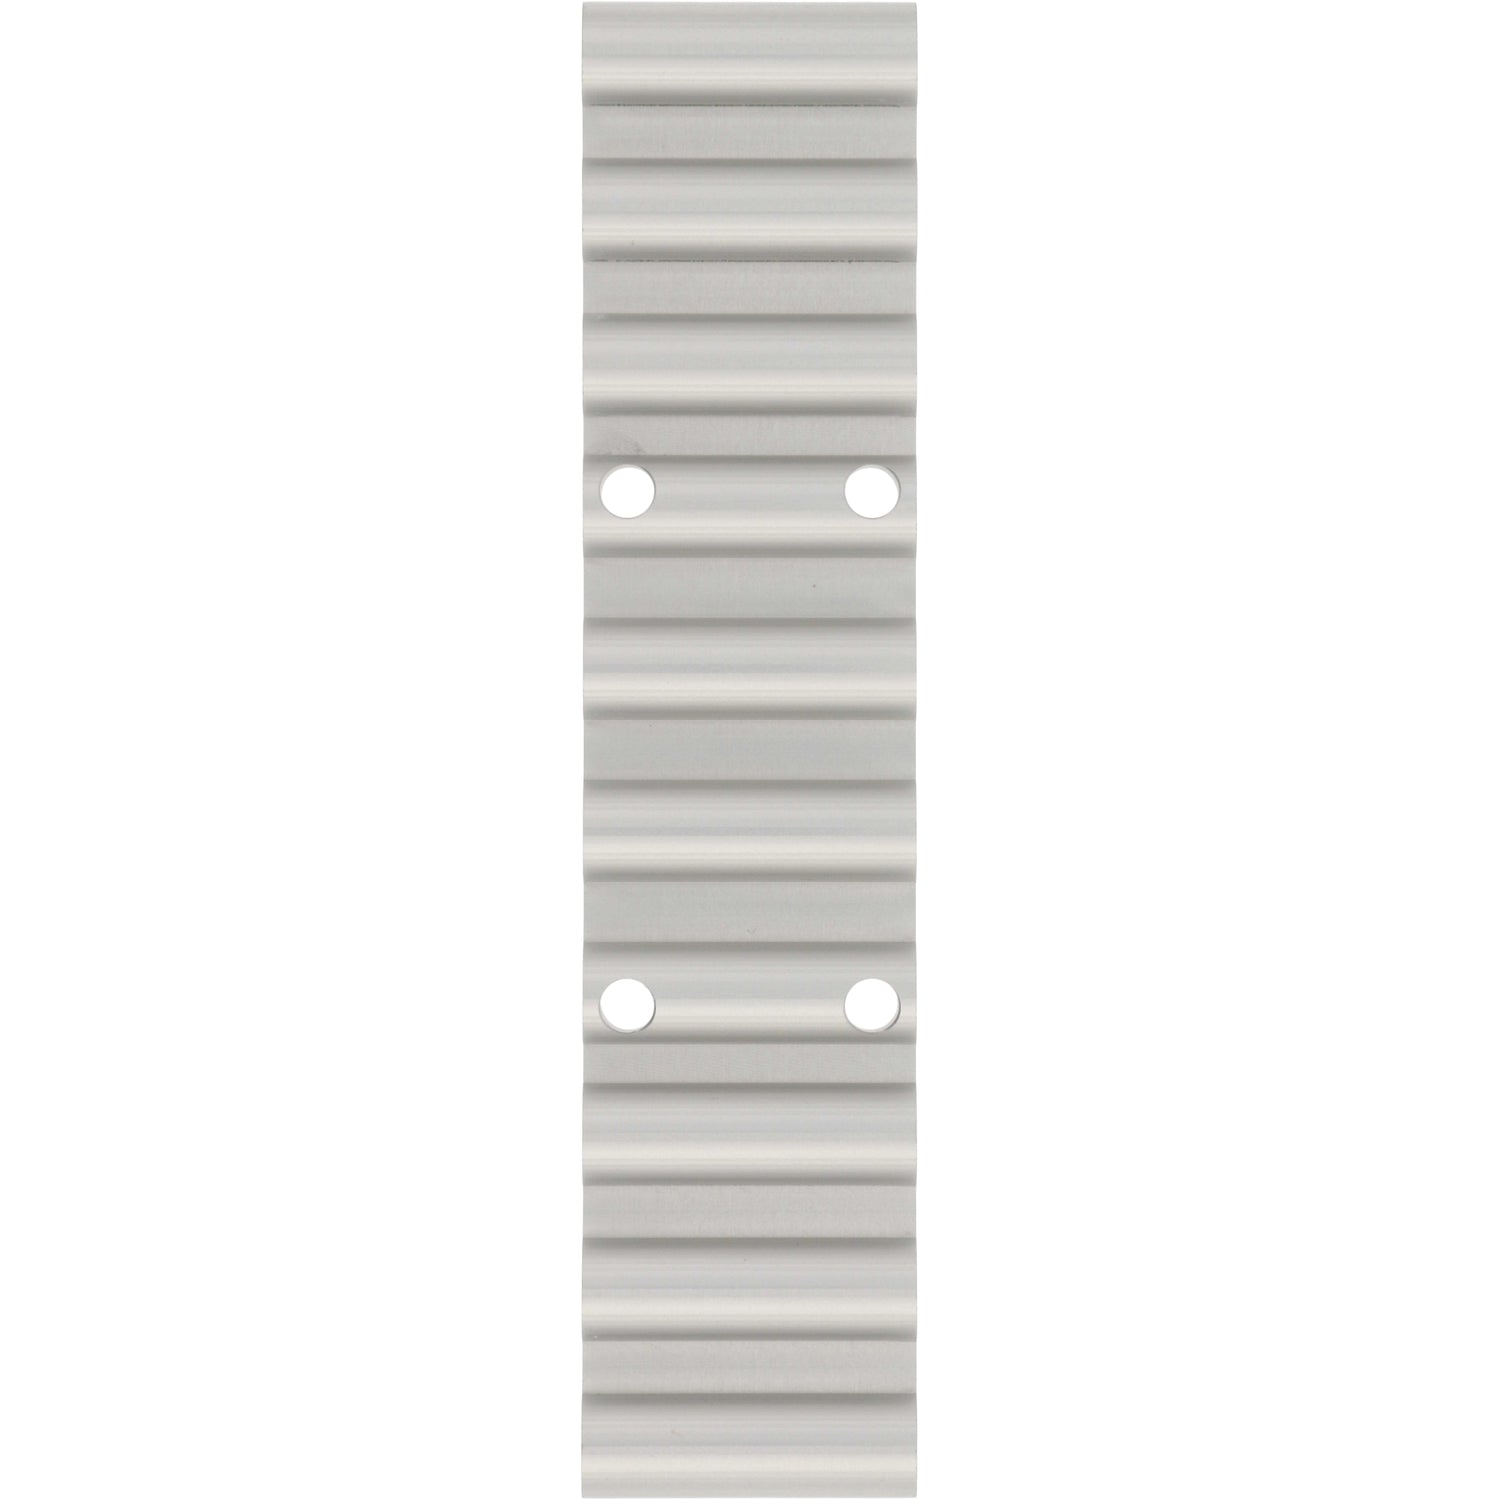 Ridged rectangular aluminum part with four through holes on white background. 